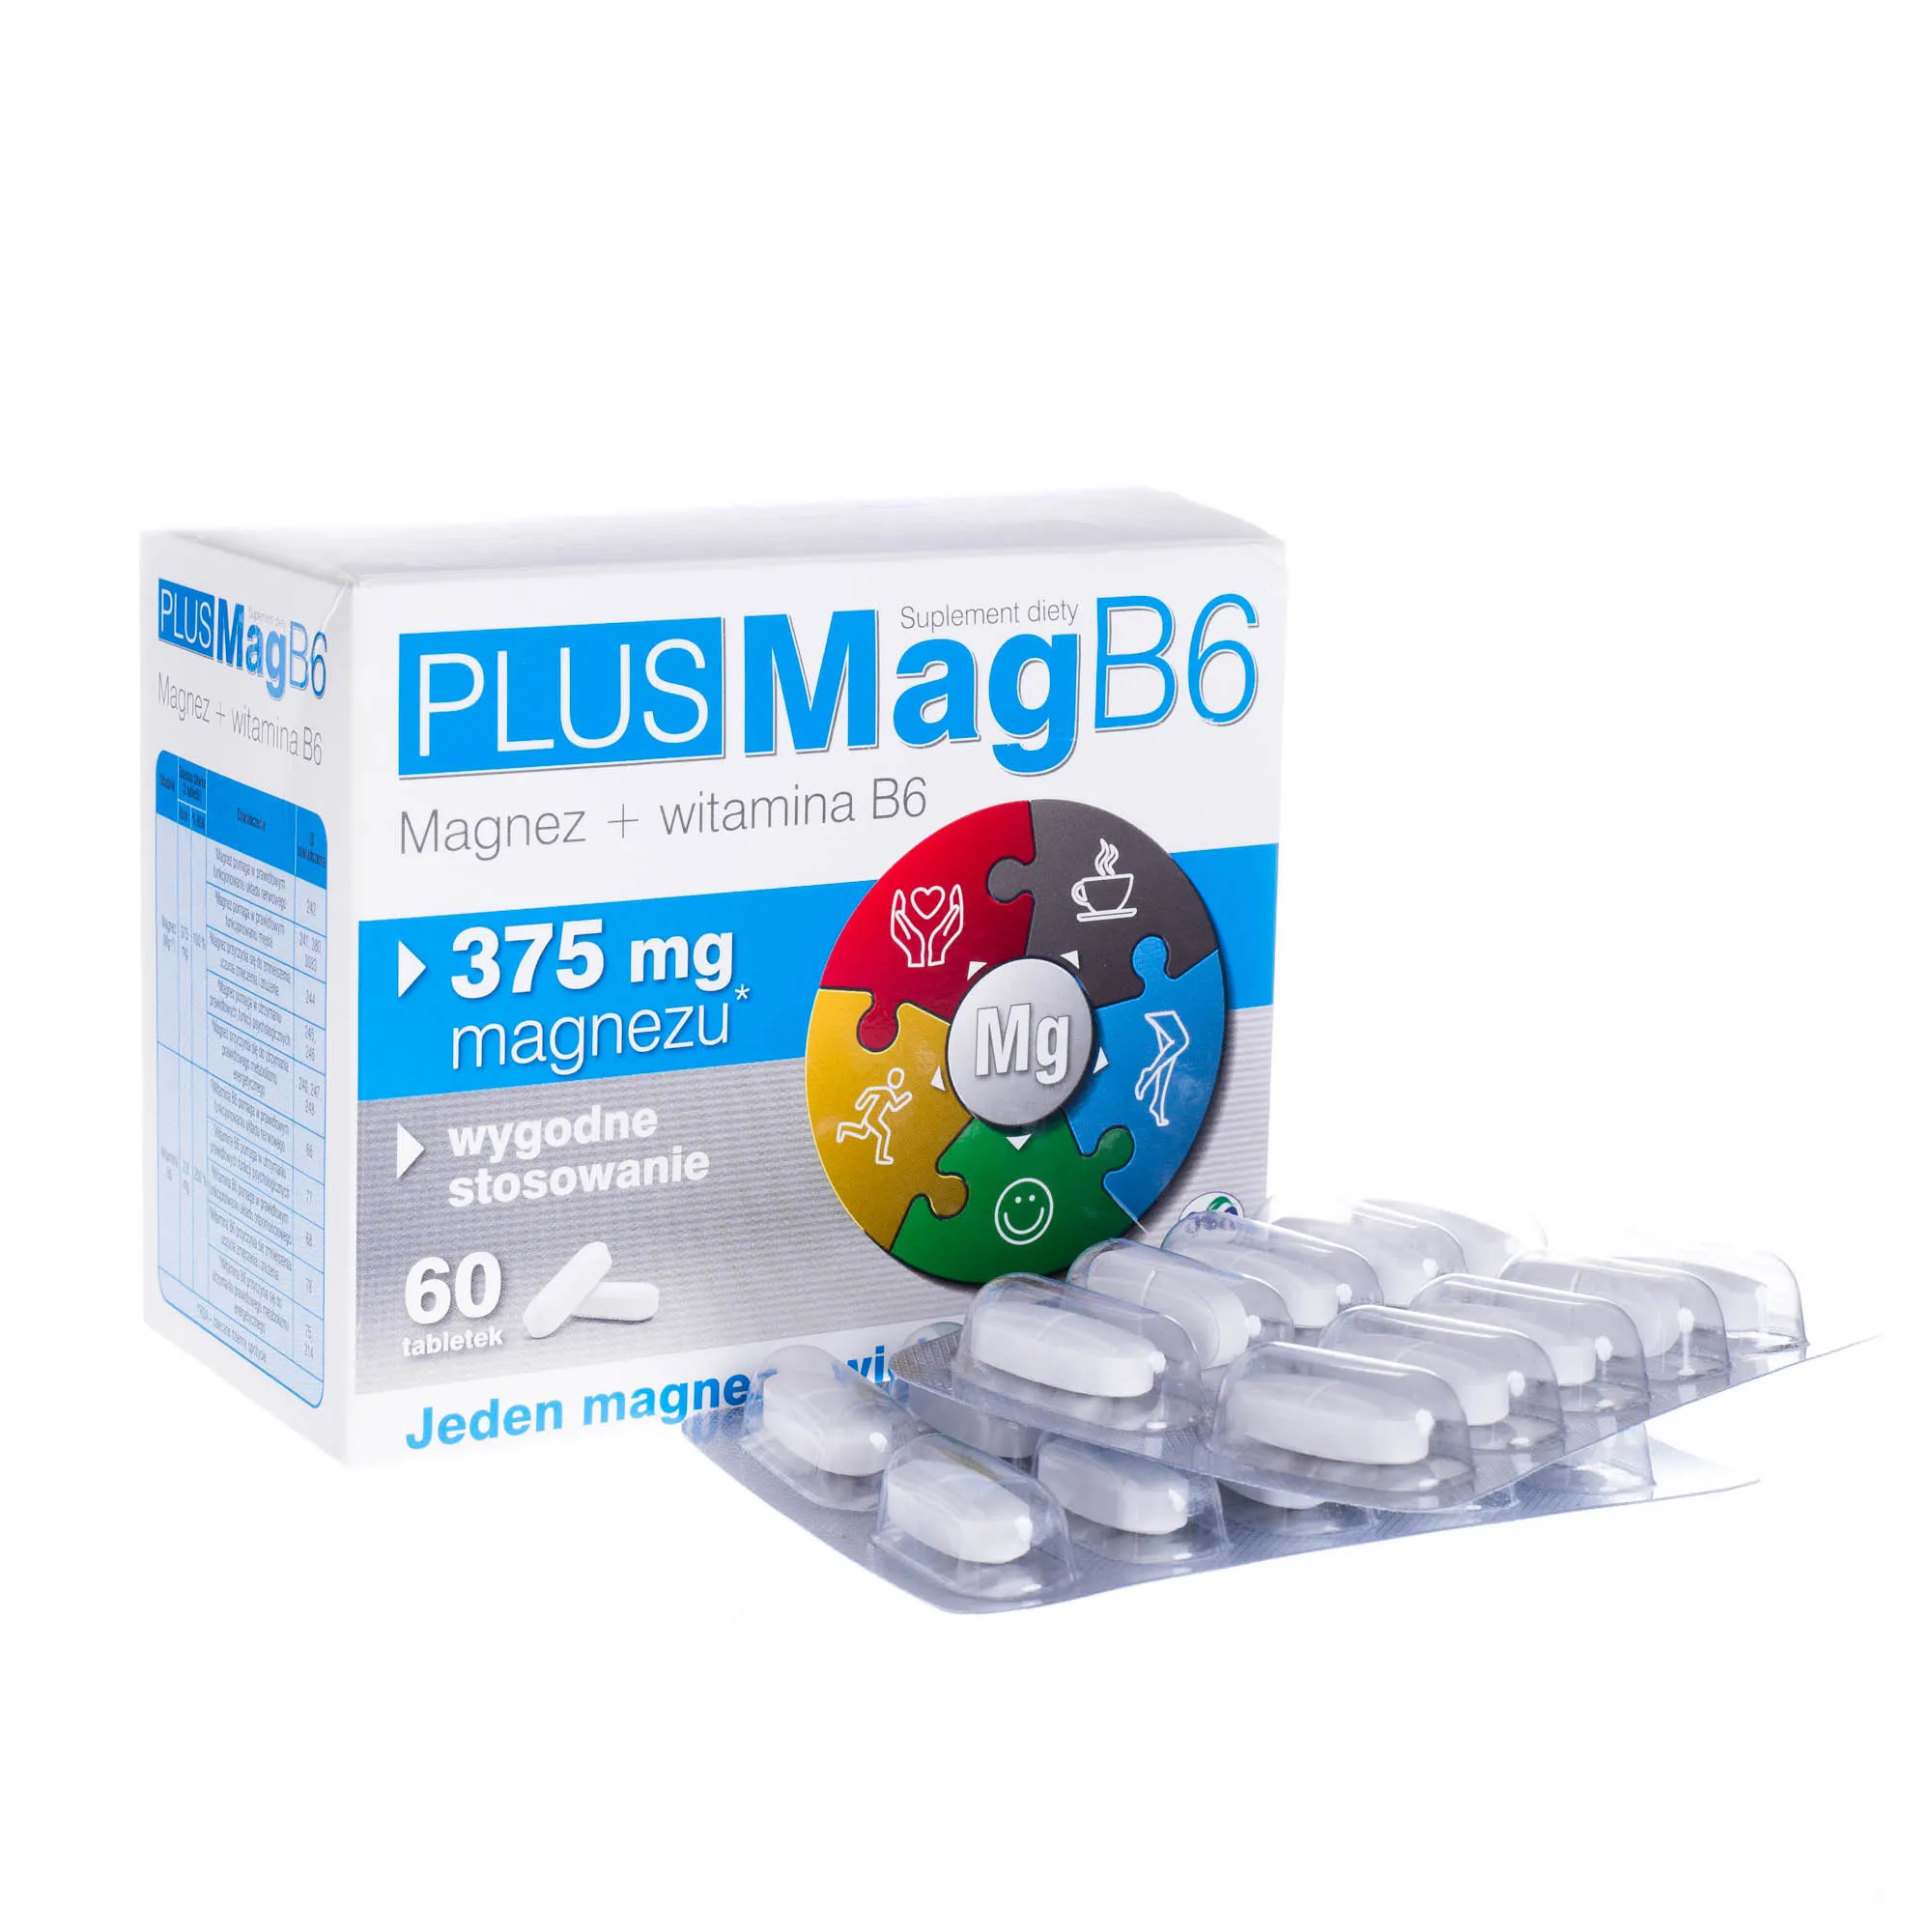 PlusMagB6, Magnez+witamina B6, 60 tabletek